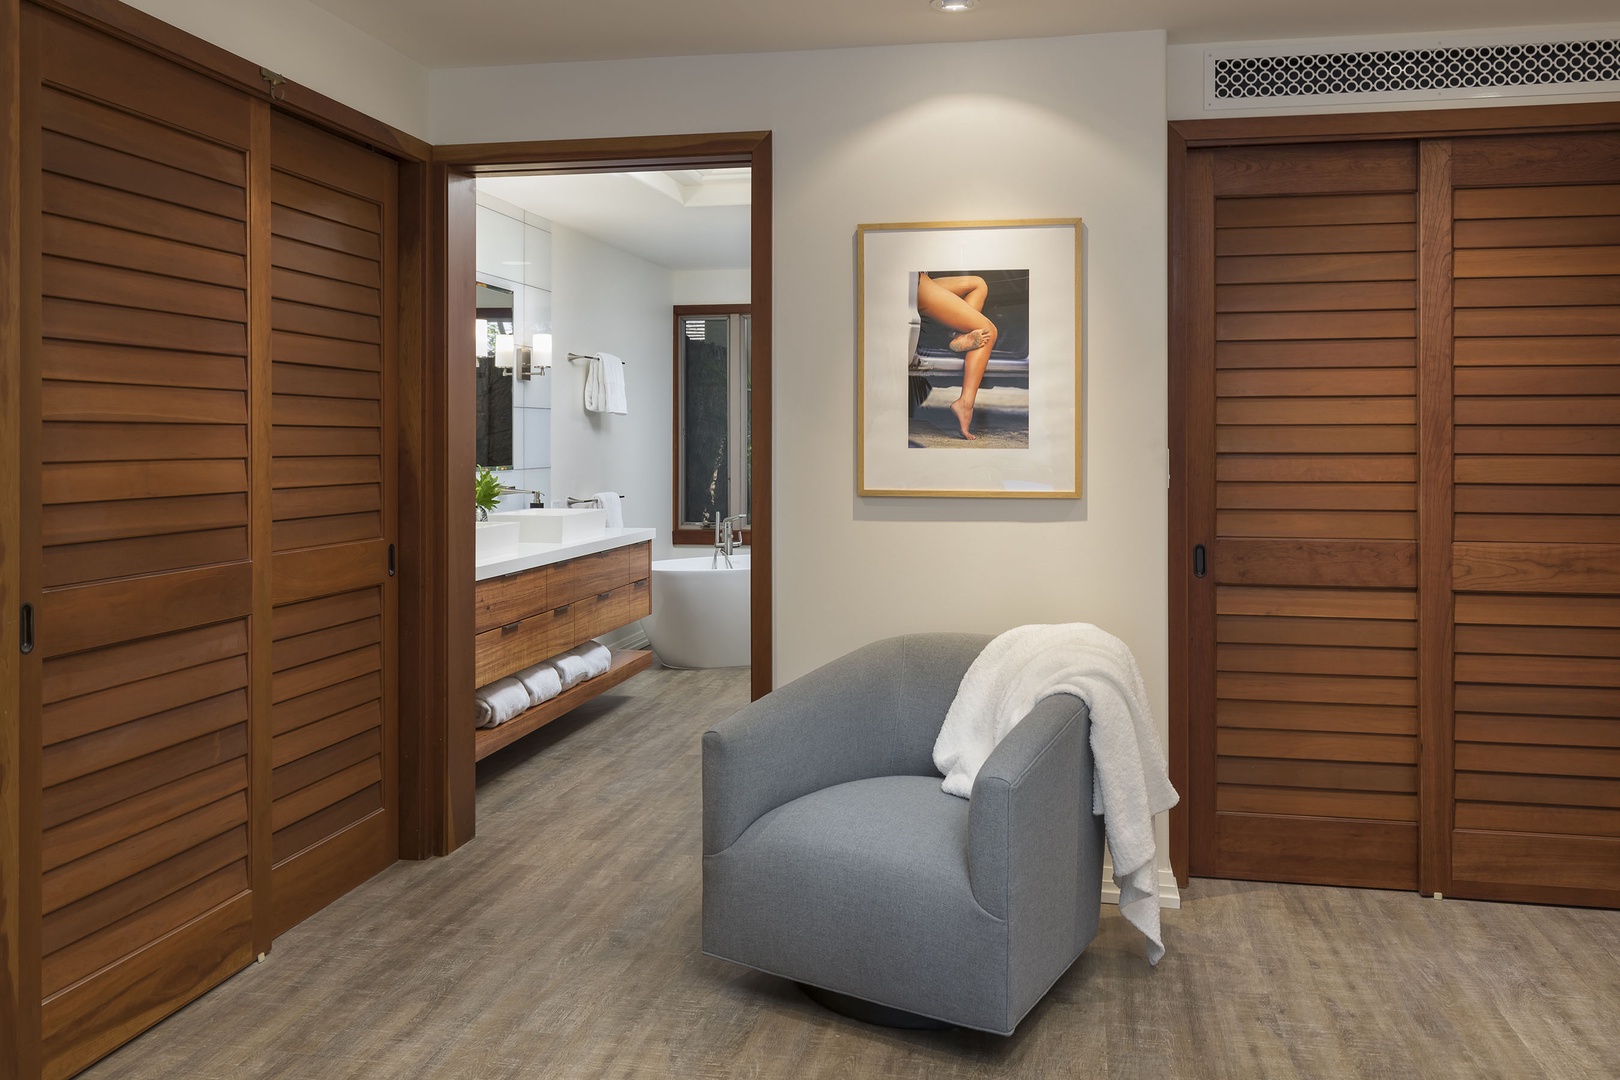 Kailua Kona Vacation Rentals, Hillside Villa 7101 - Primary Bedroom Suite